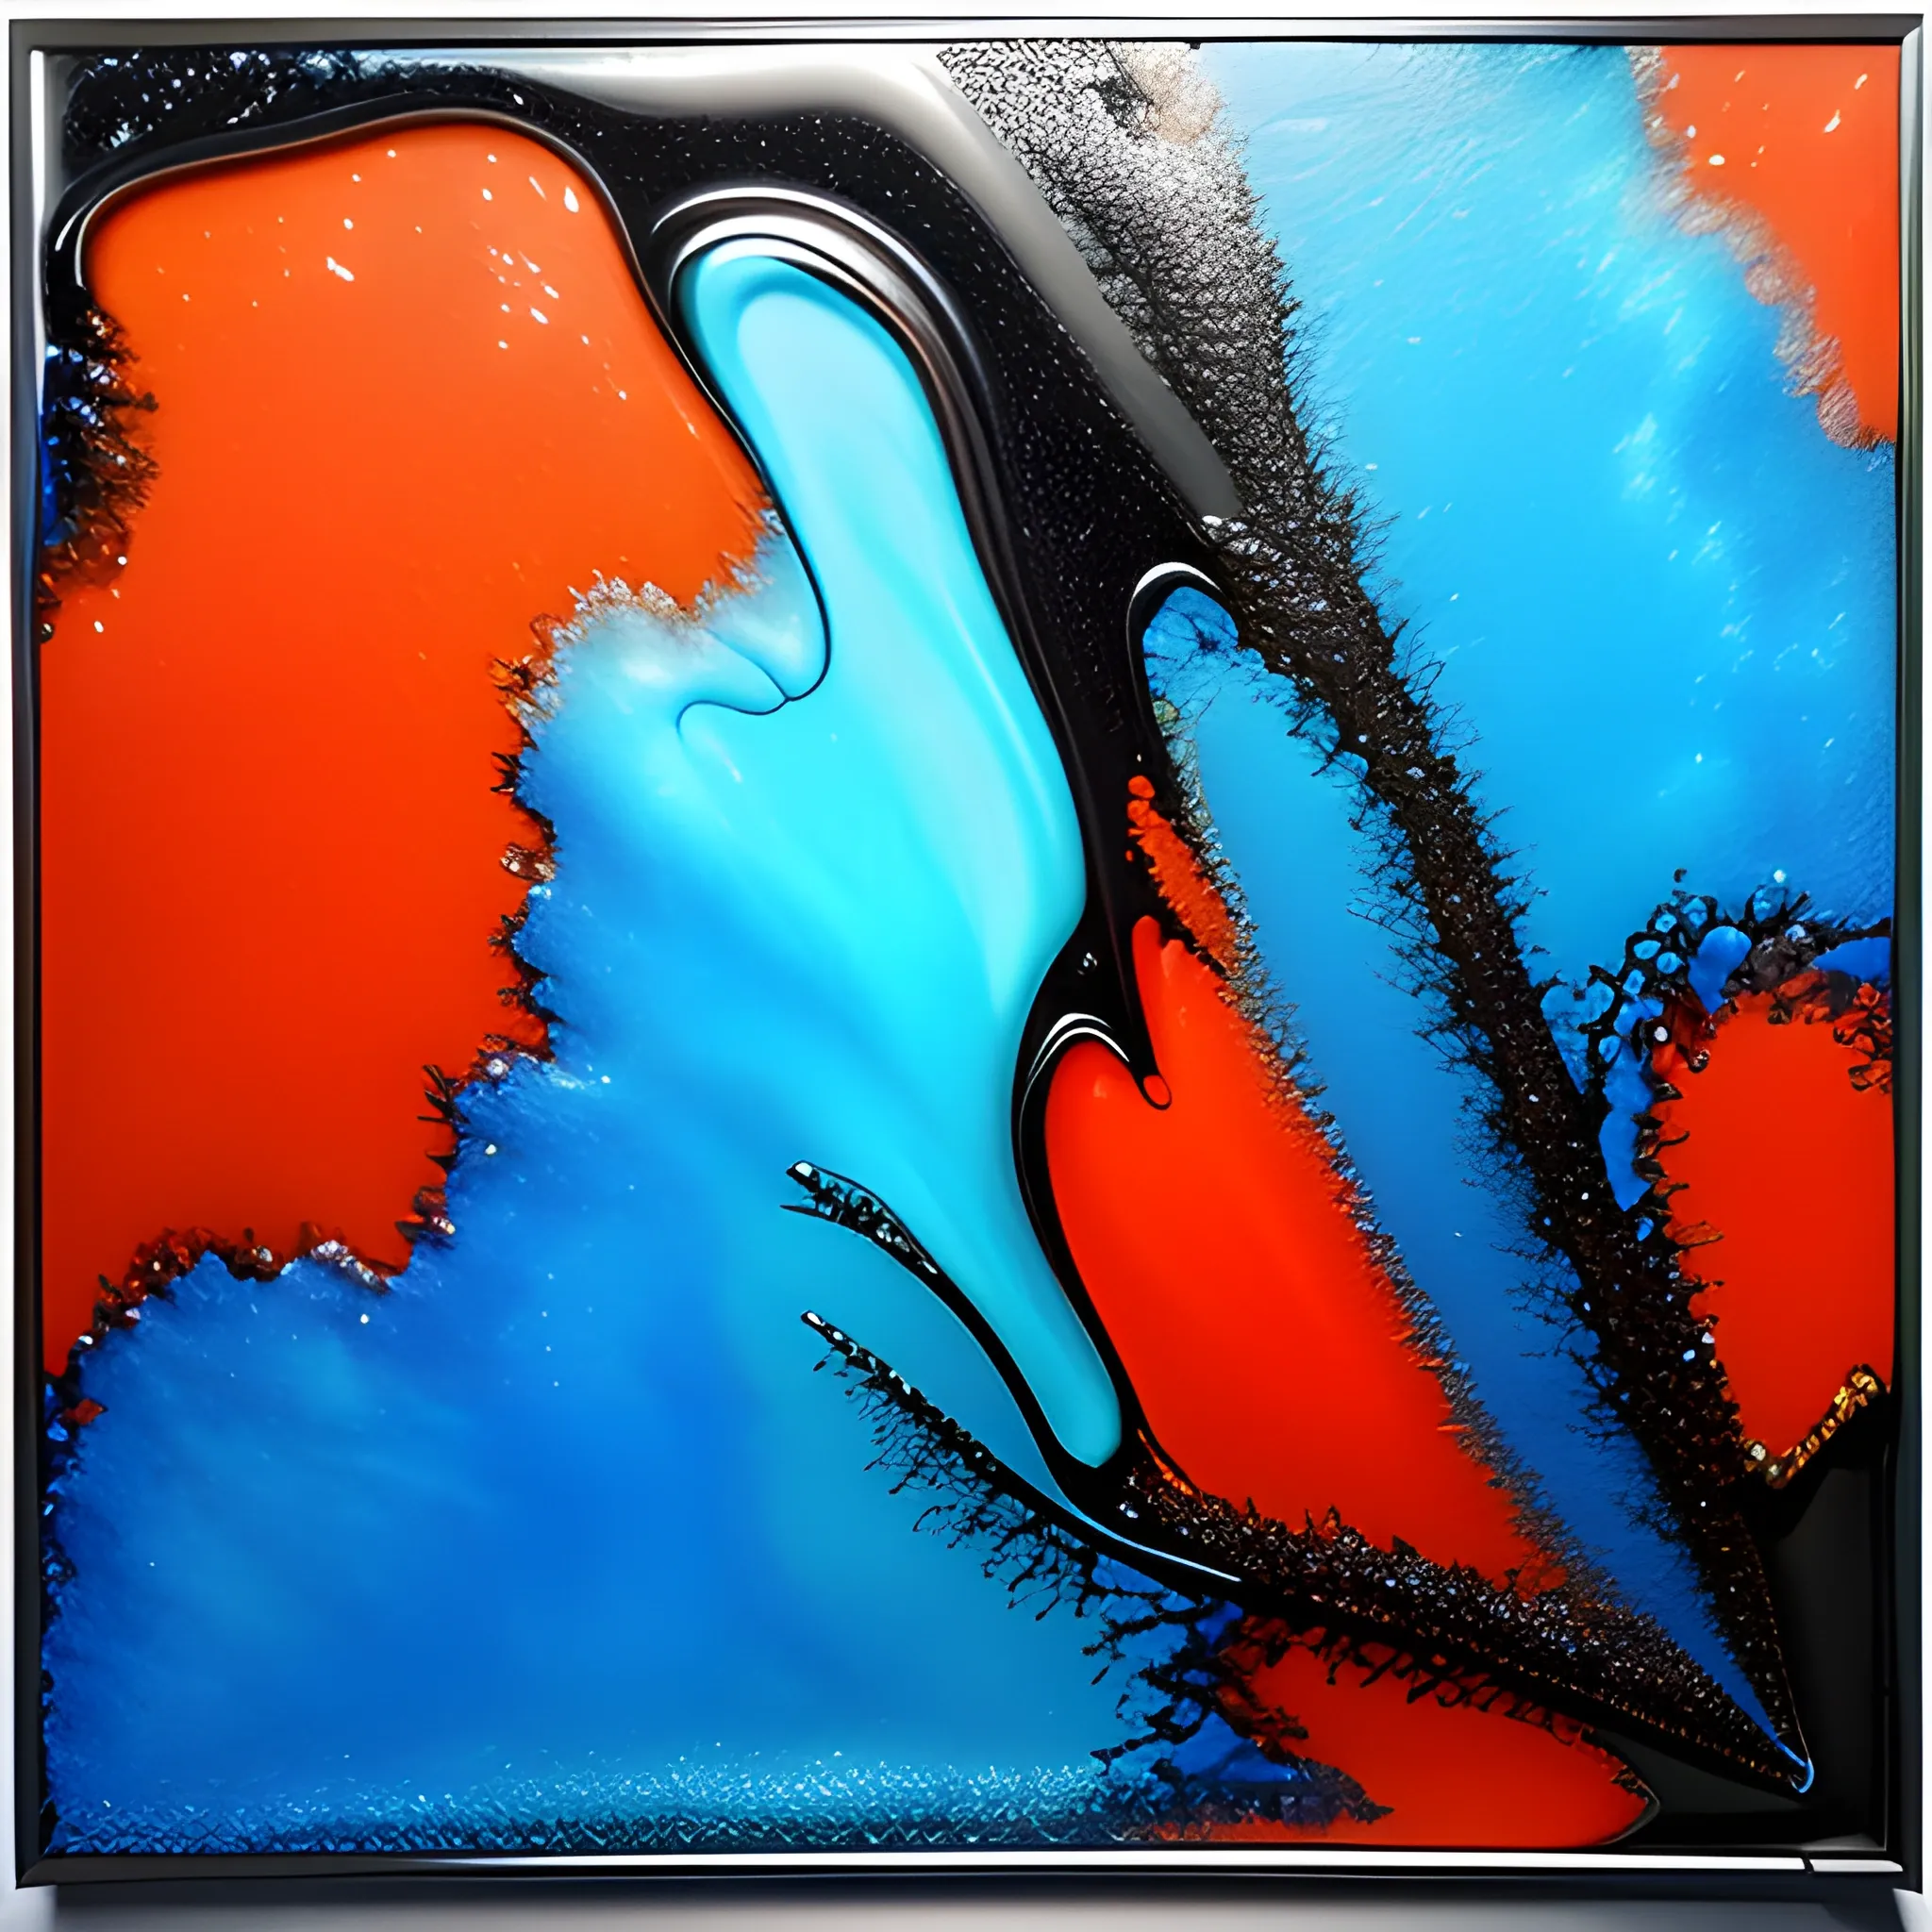 resin artwork, Ultra-high definition, liquid art, resin pour, sky blue, red, orange, grey, black,